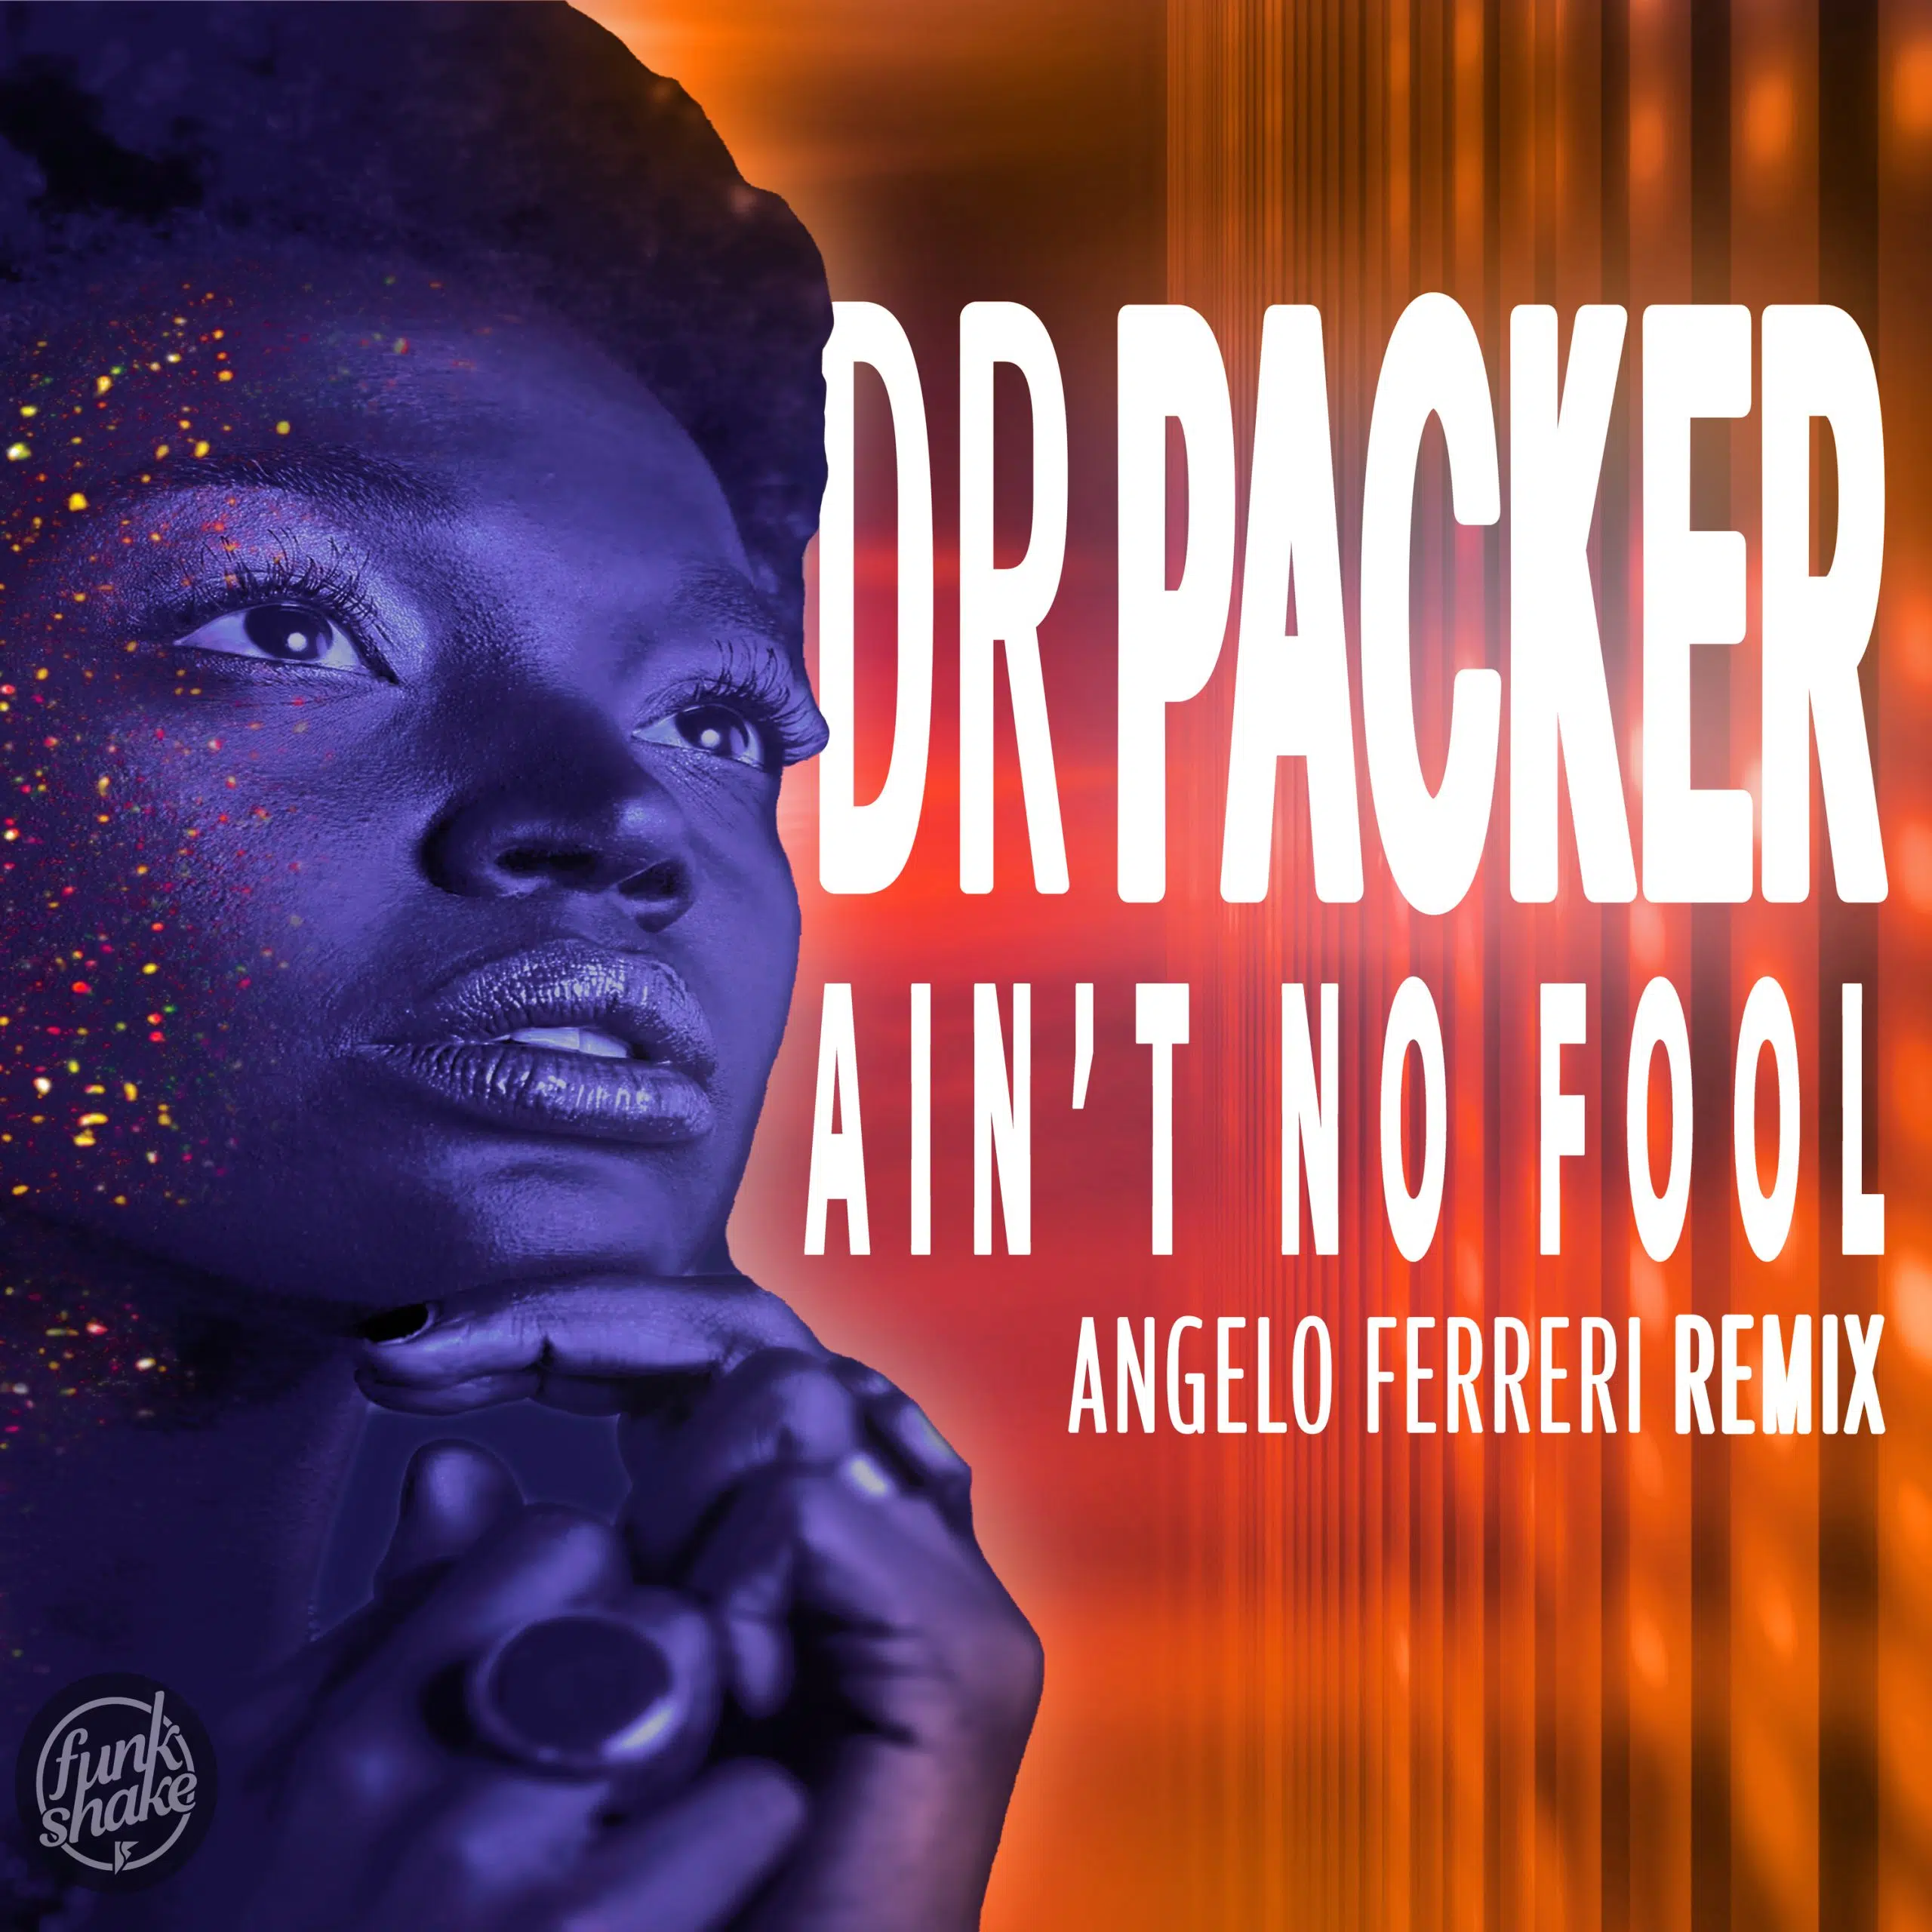 Dr Packer “Ain’t No Fool” Angelo Ferreri Remix